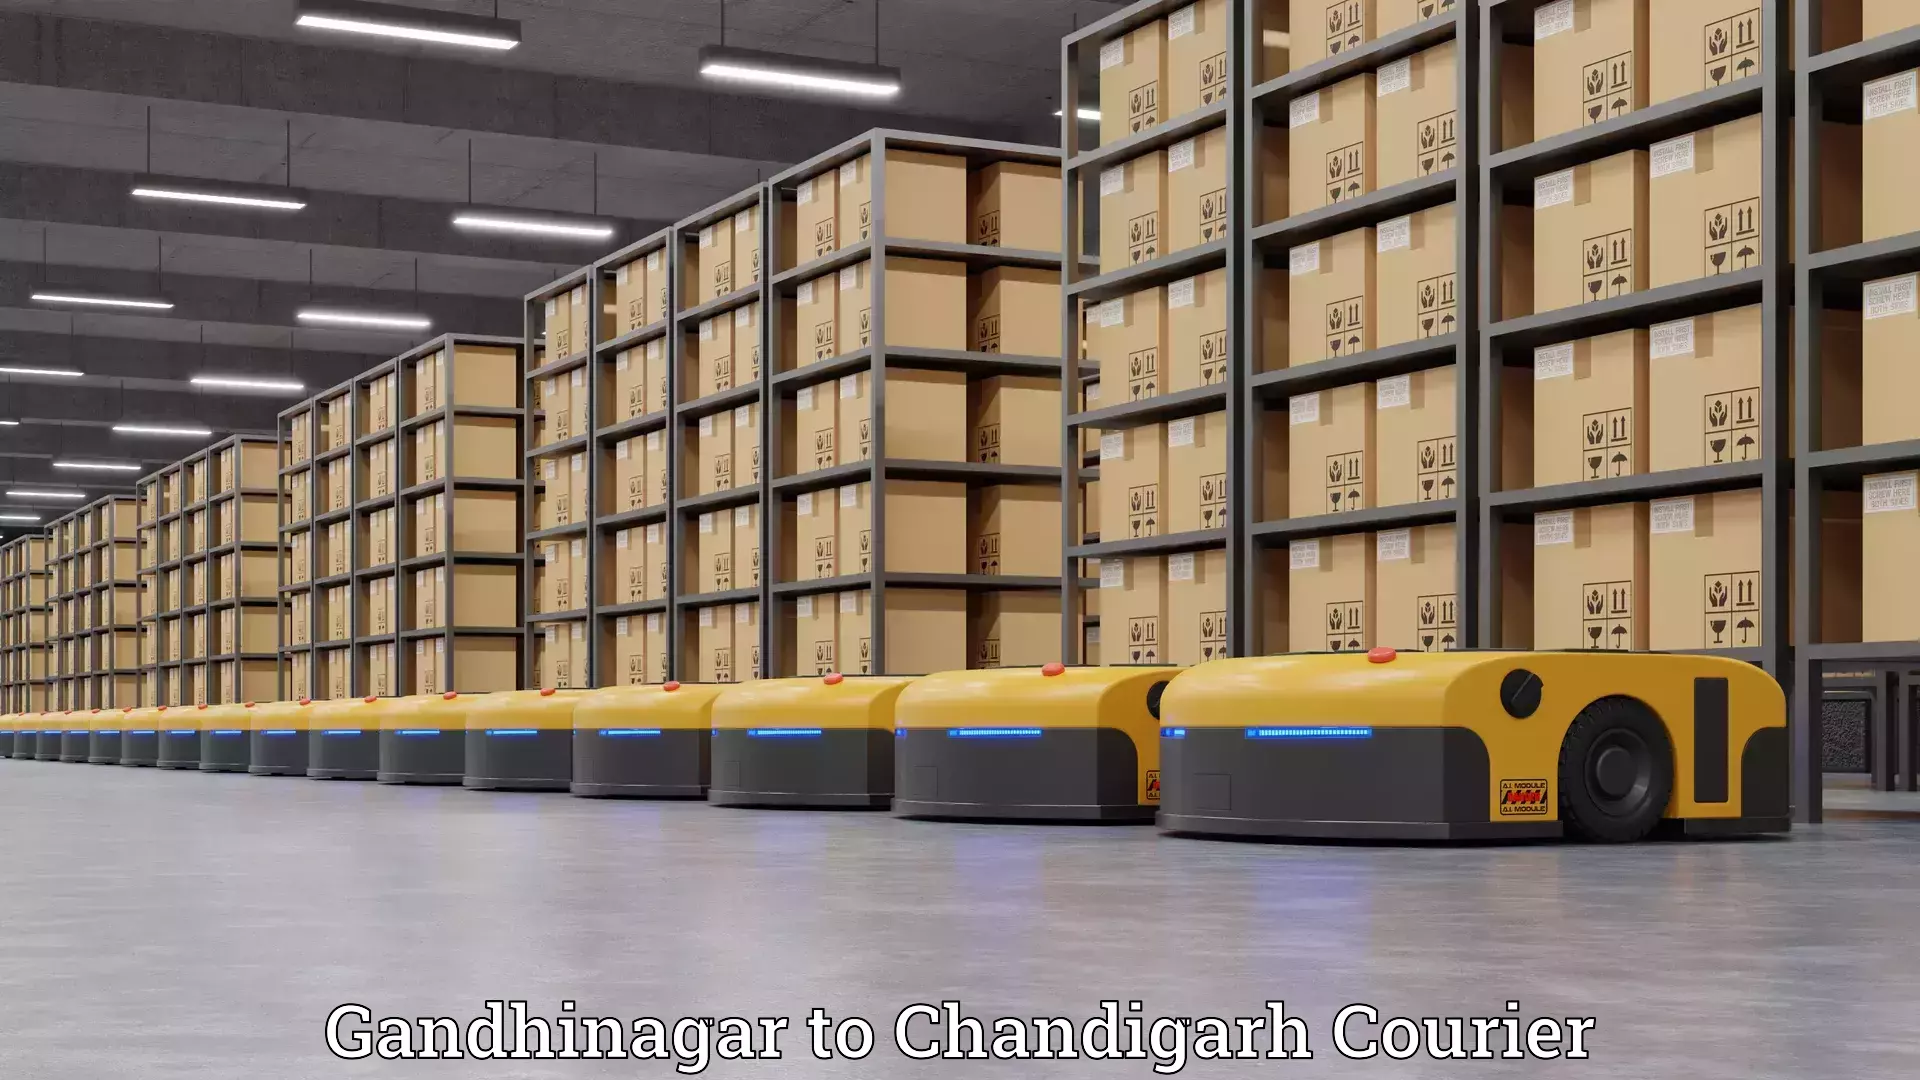 Specialized moving company Gandhinagar to Chandigarh